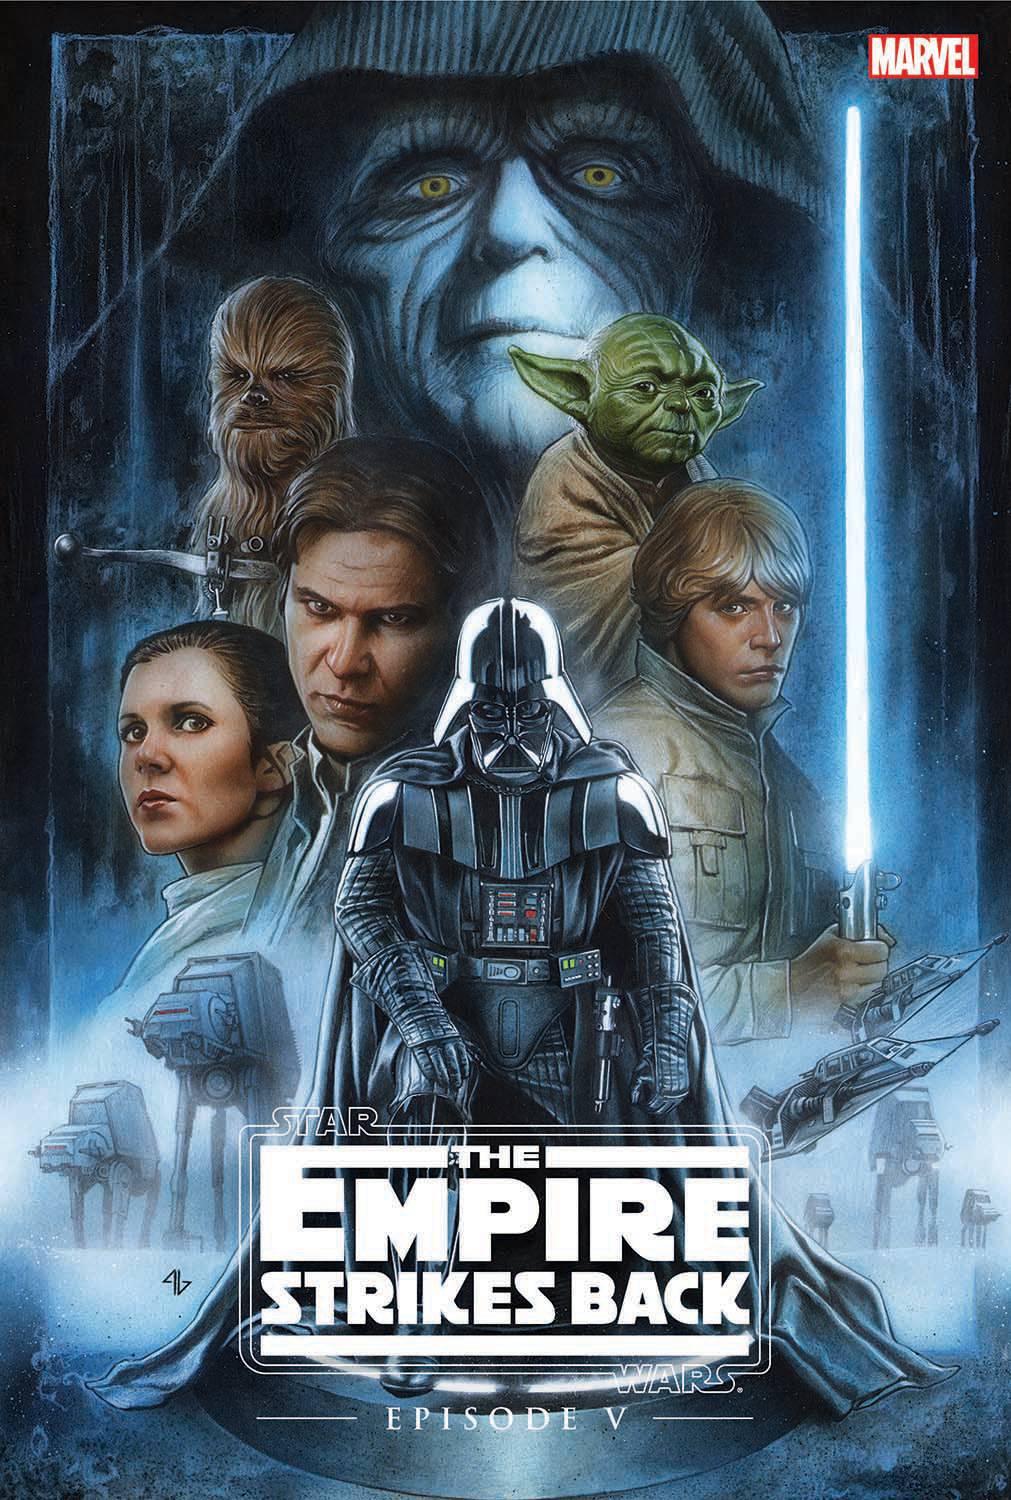 Star Wars: Episode V, The Empire Strikes Back Vol. 1 #1